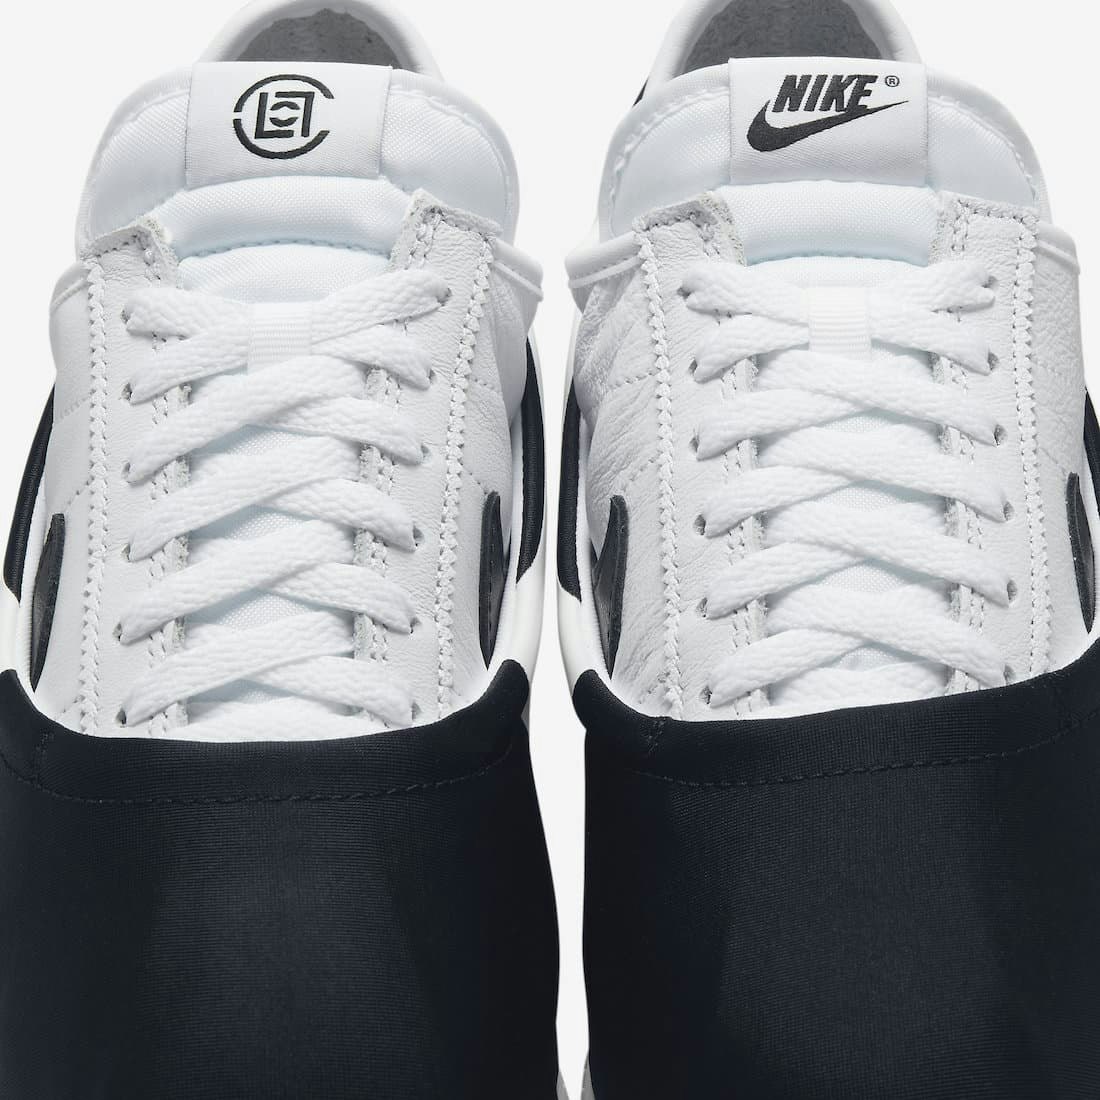 CLOT x Nike Cortez "Clotez"